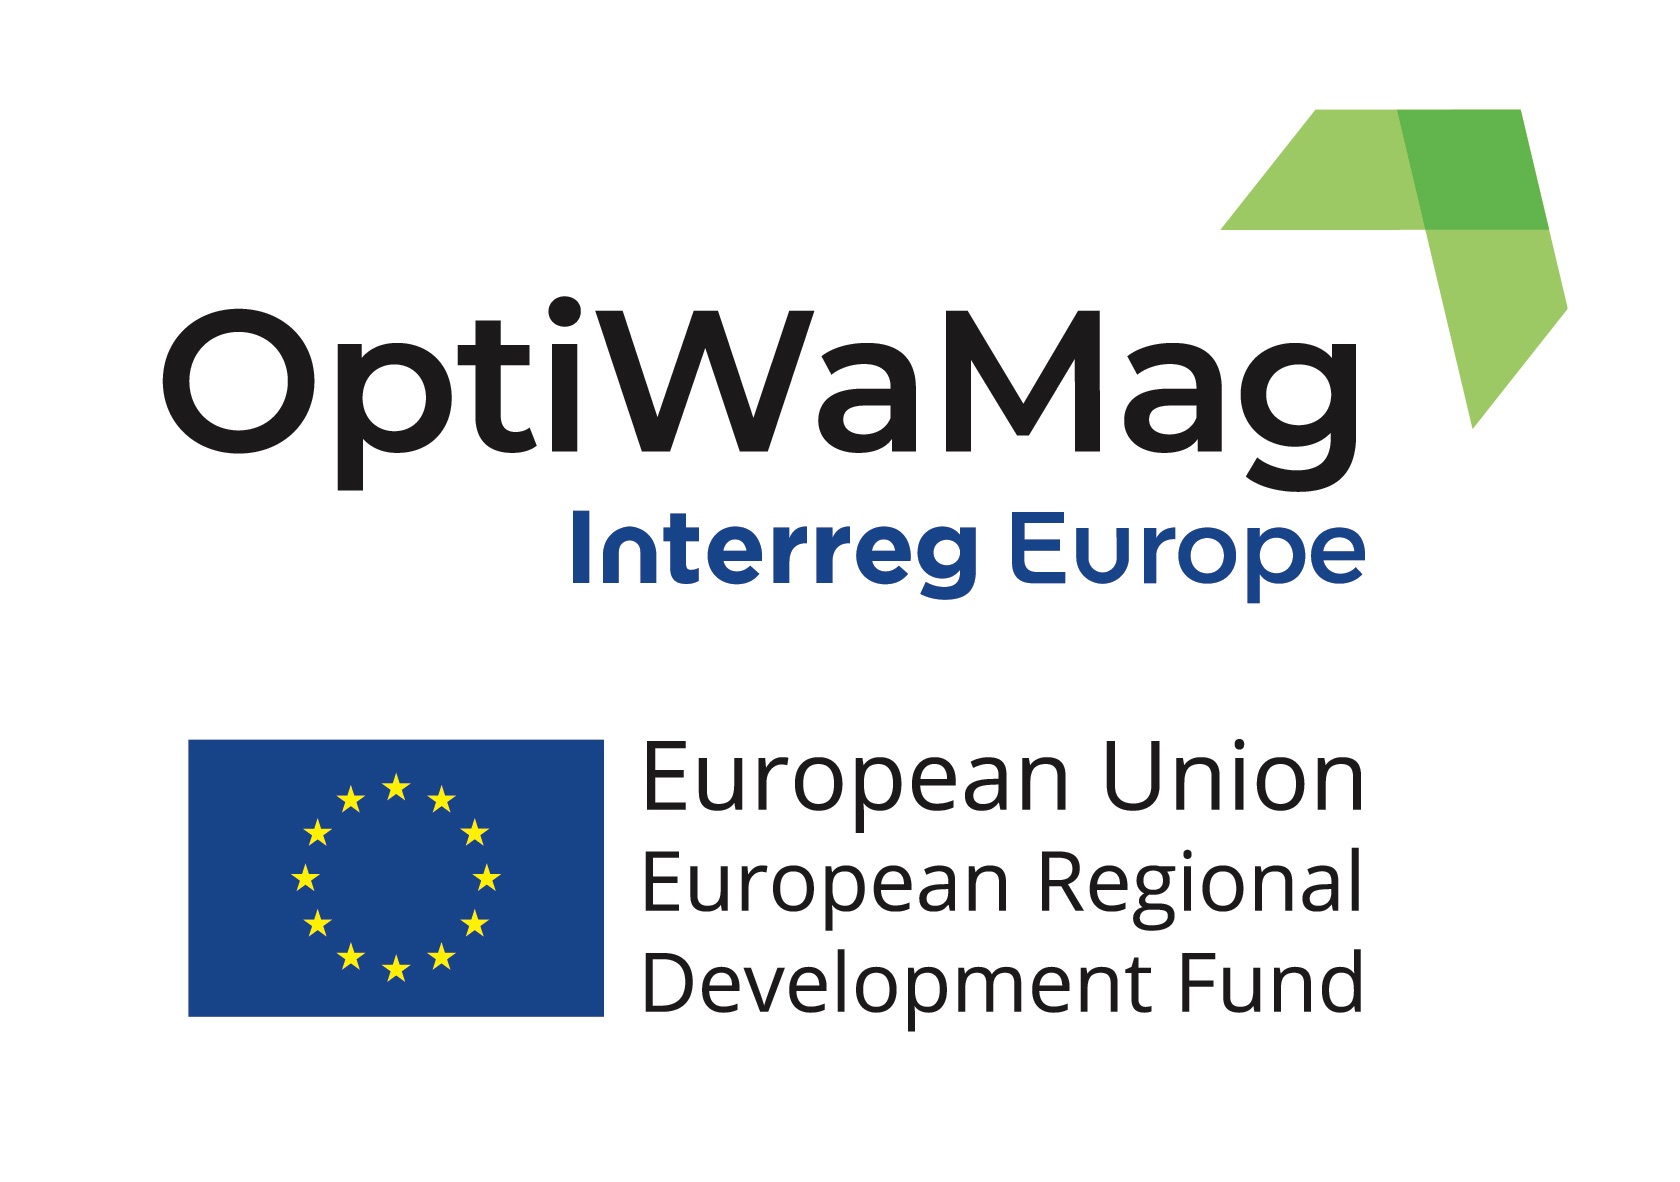 OptiWaMag project started